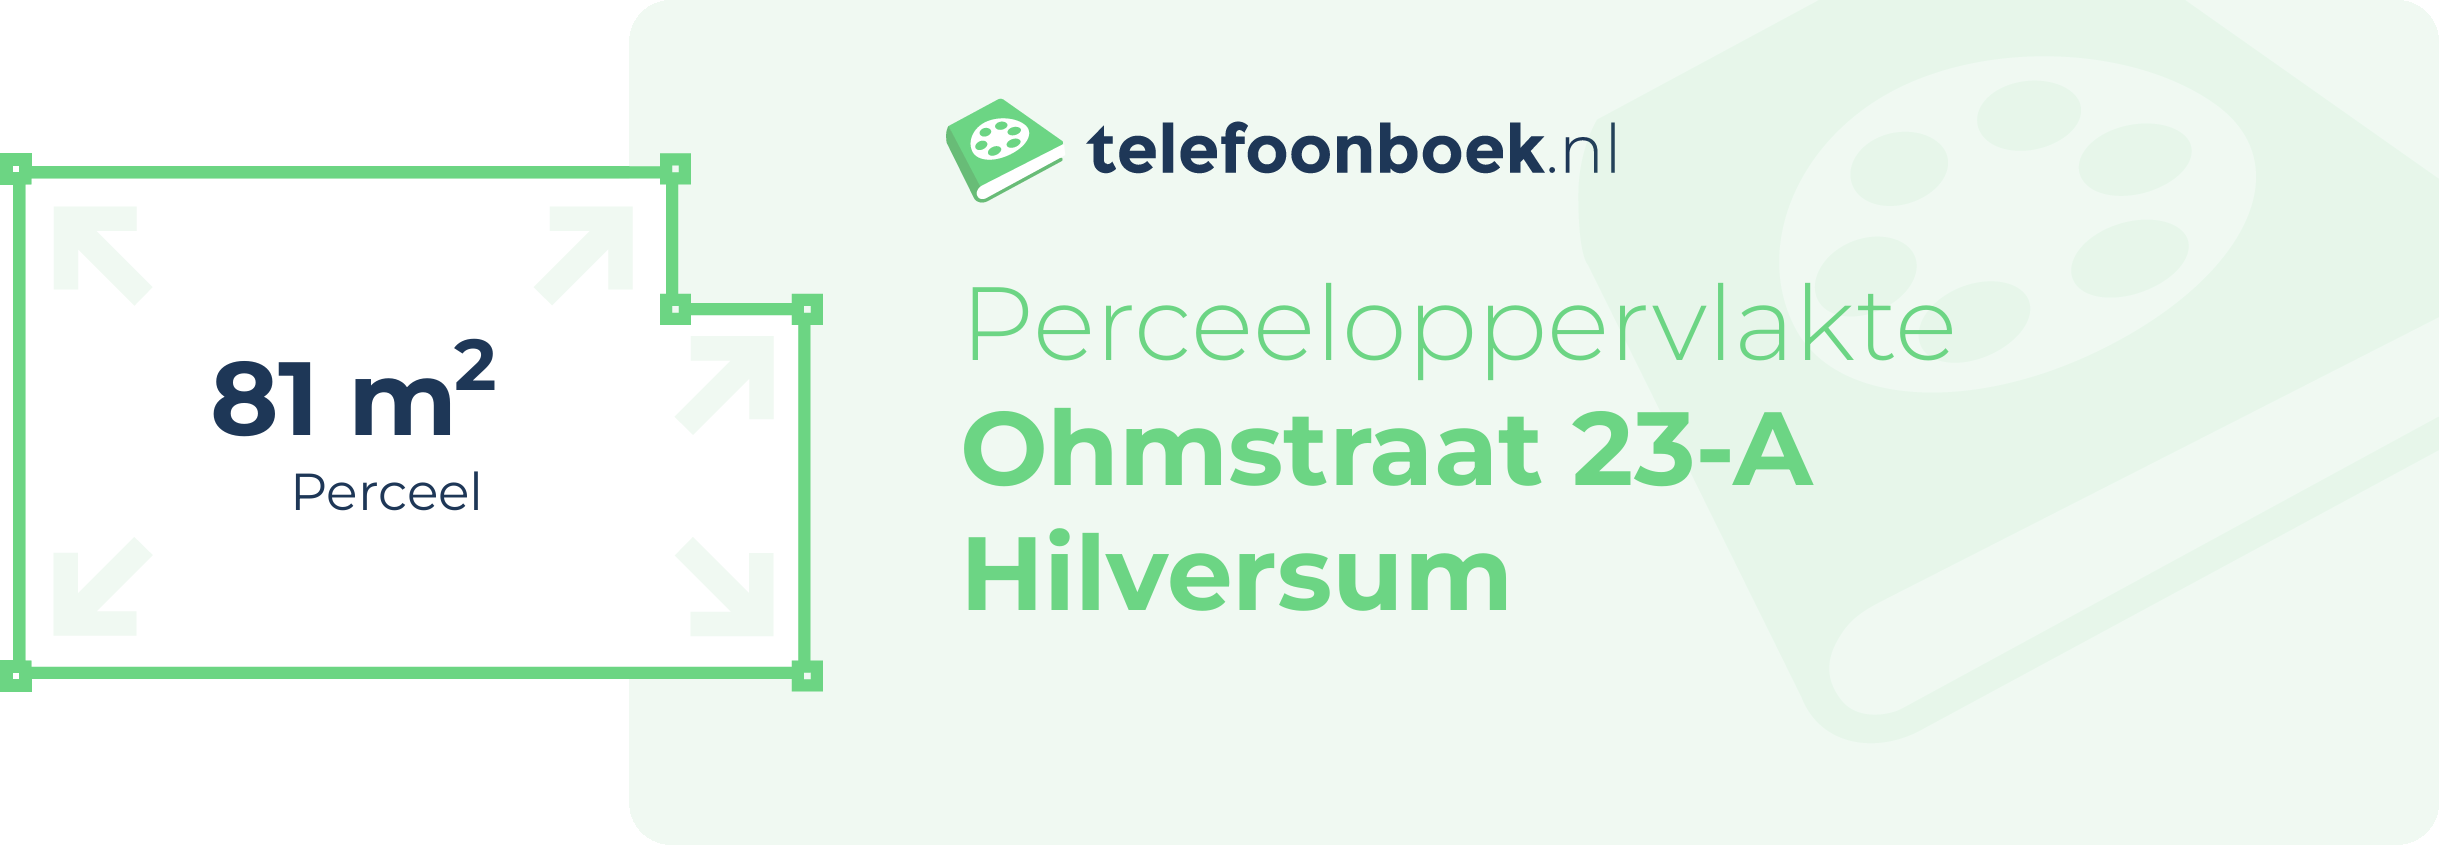 Perceeloppervlakte Ohmstraat 23-A Hilversum